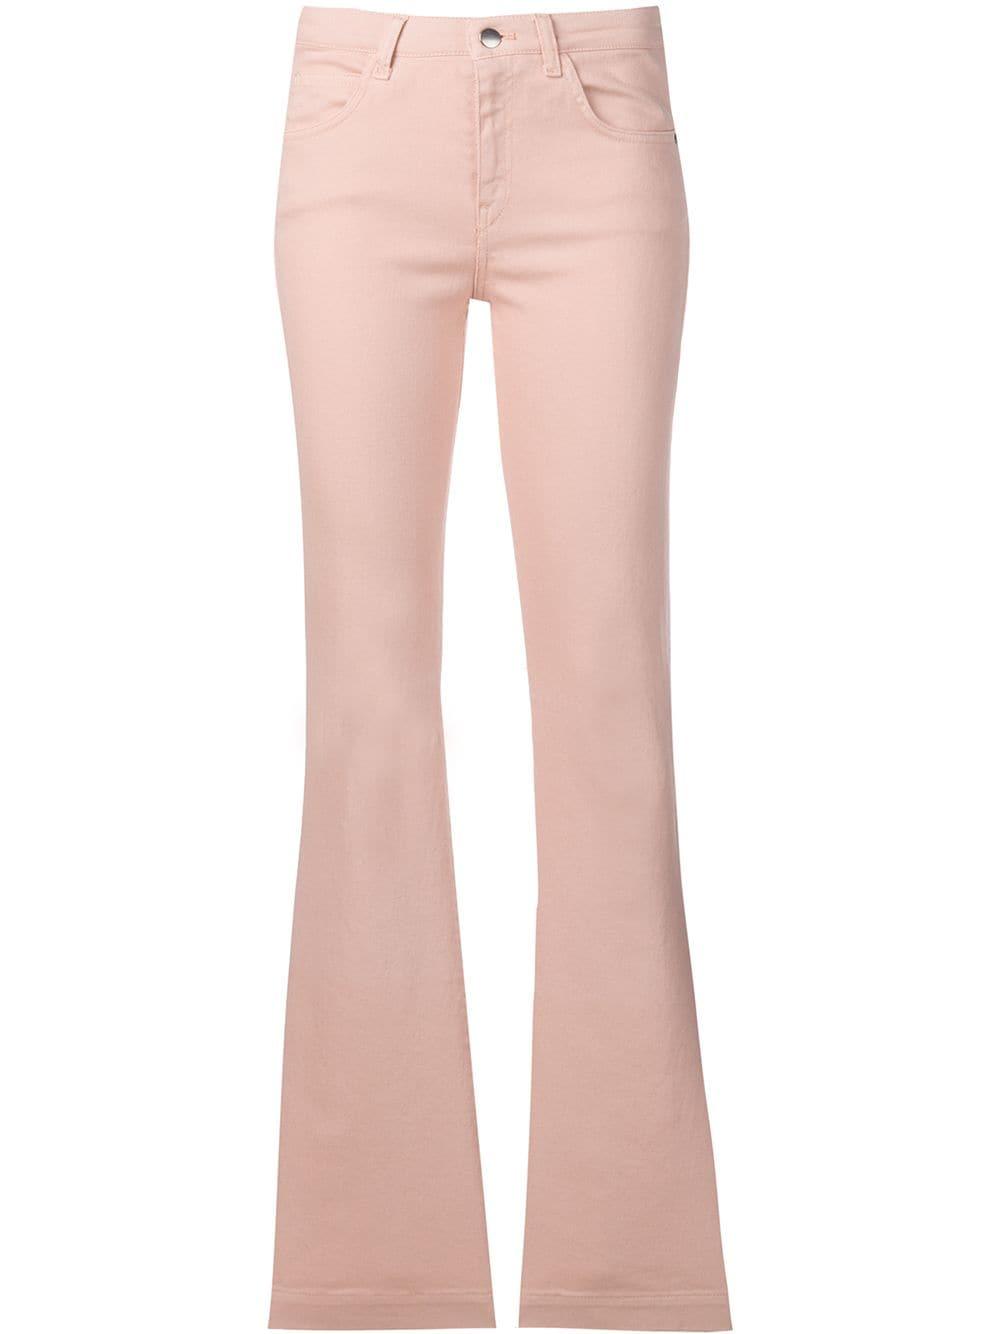 L'Autre Chose Denim Flared Jeans in Pink - Lyst